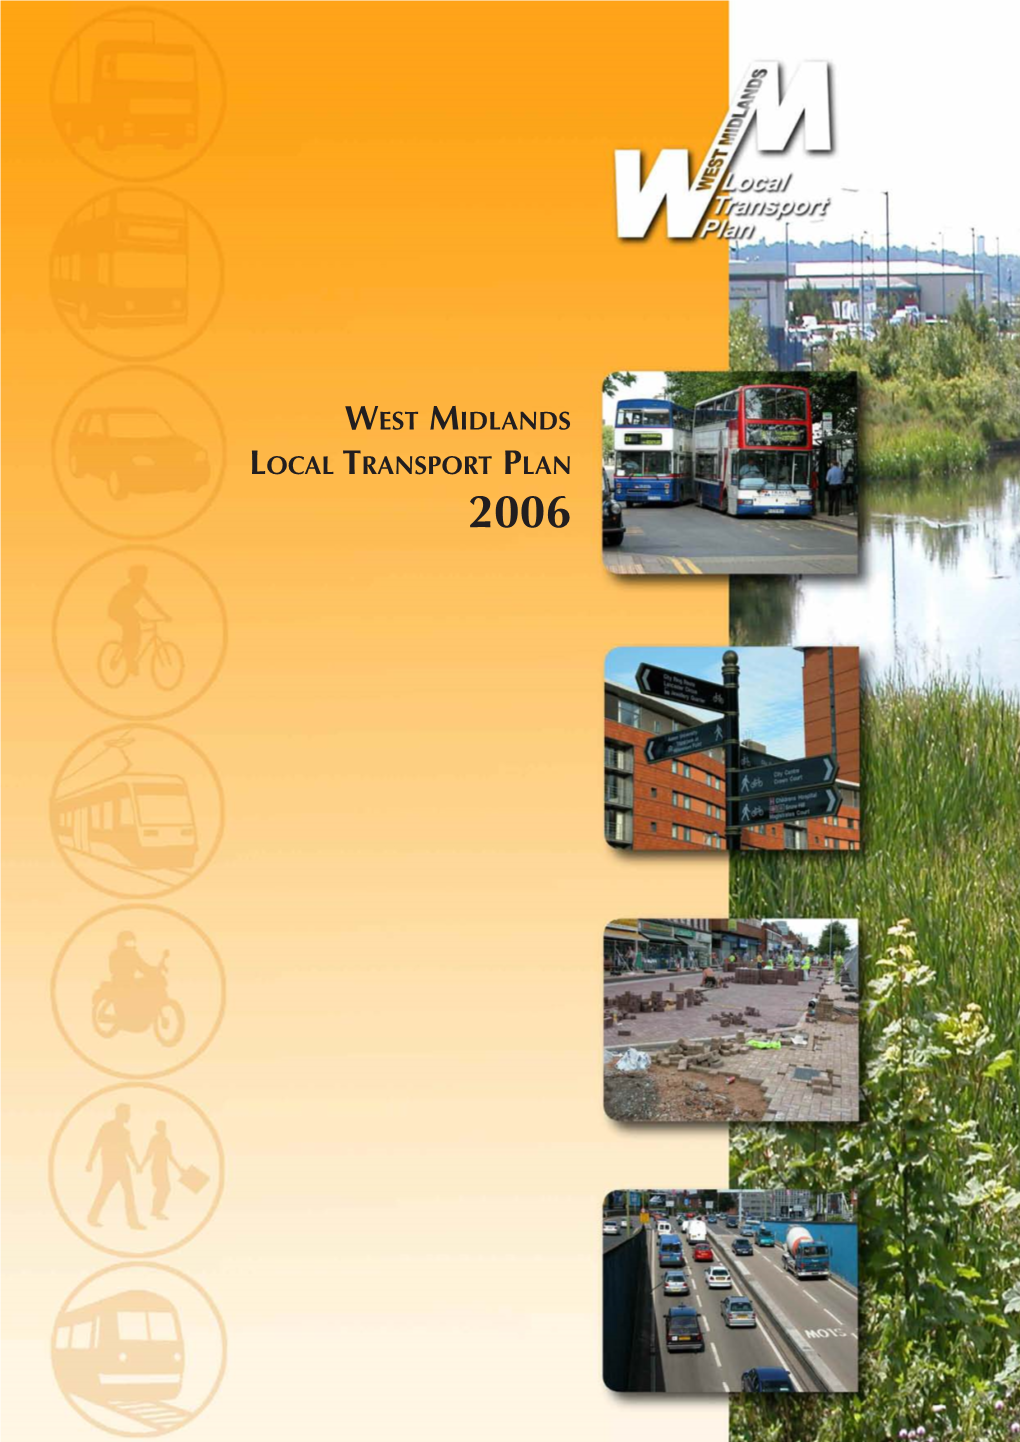 WEST MIDLANDS LOCAL TRANSPORT PLAN 2006 West Midlands Local Transport Plan 2006